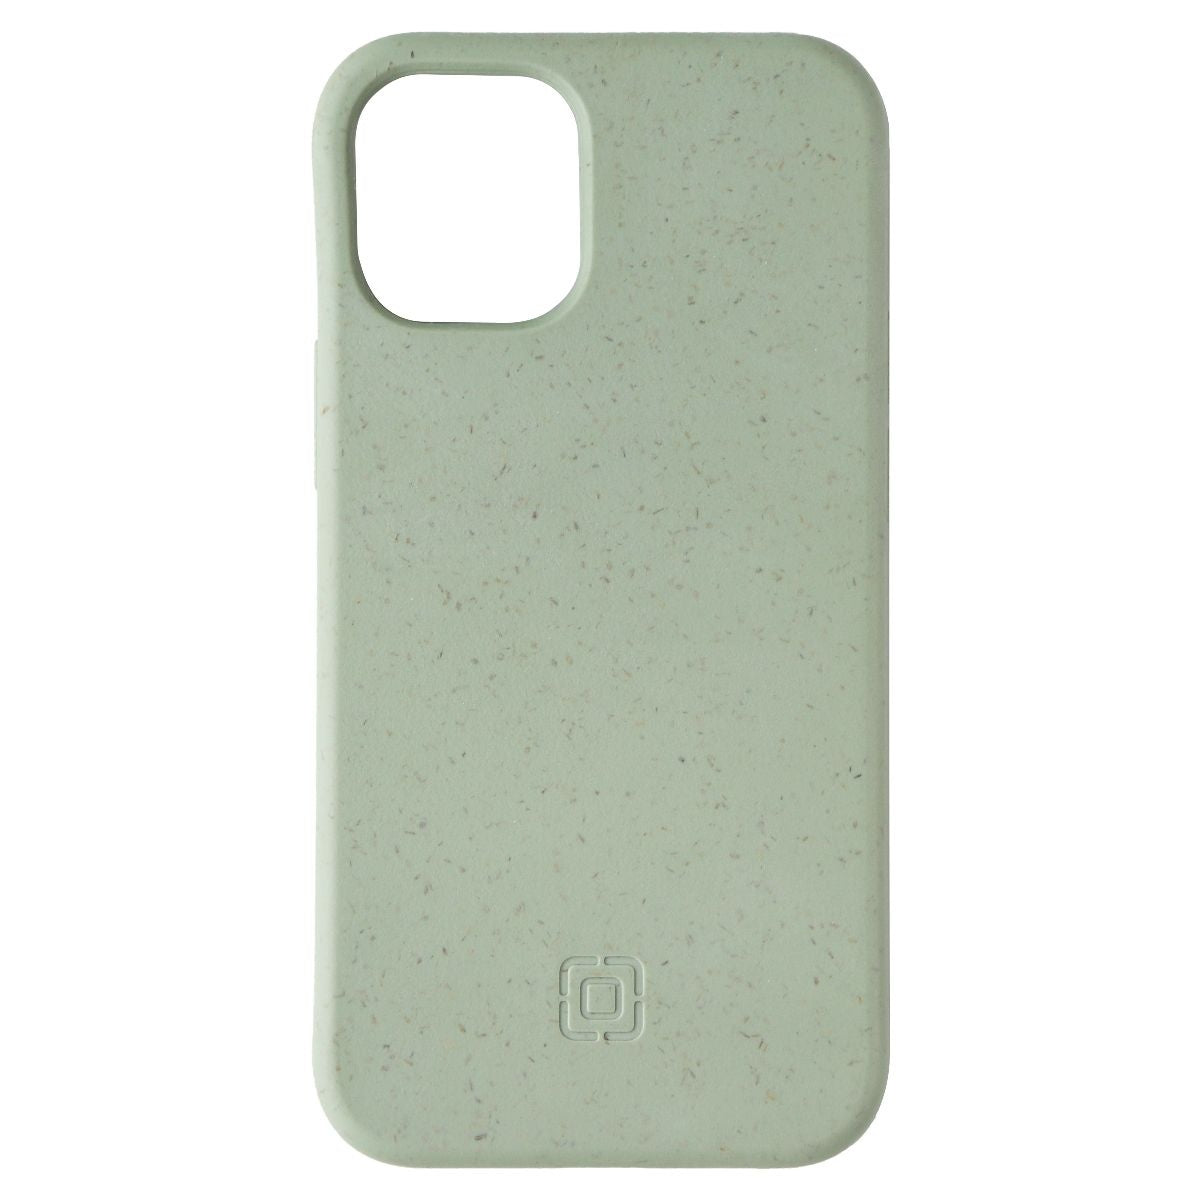 Incipio Organicore Case for Apple iPhone 12 Mini - Eucalyptus Cell Phone - Cases, Covers & Skins Incipio    - Simple Cell Bulk Wholesale Pricing - USA Seller